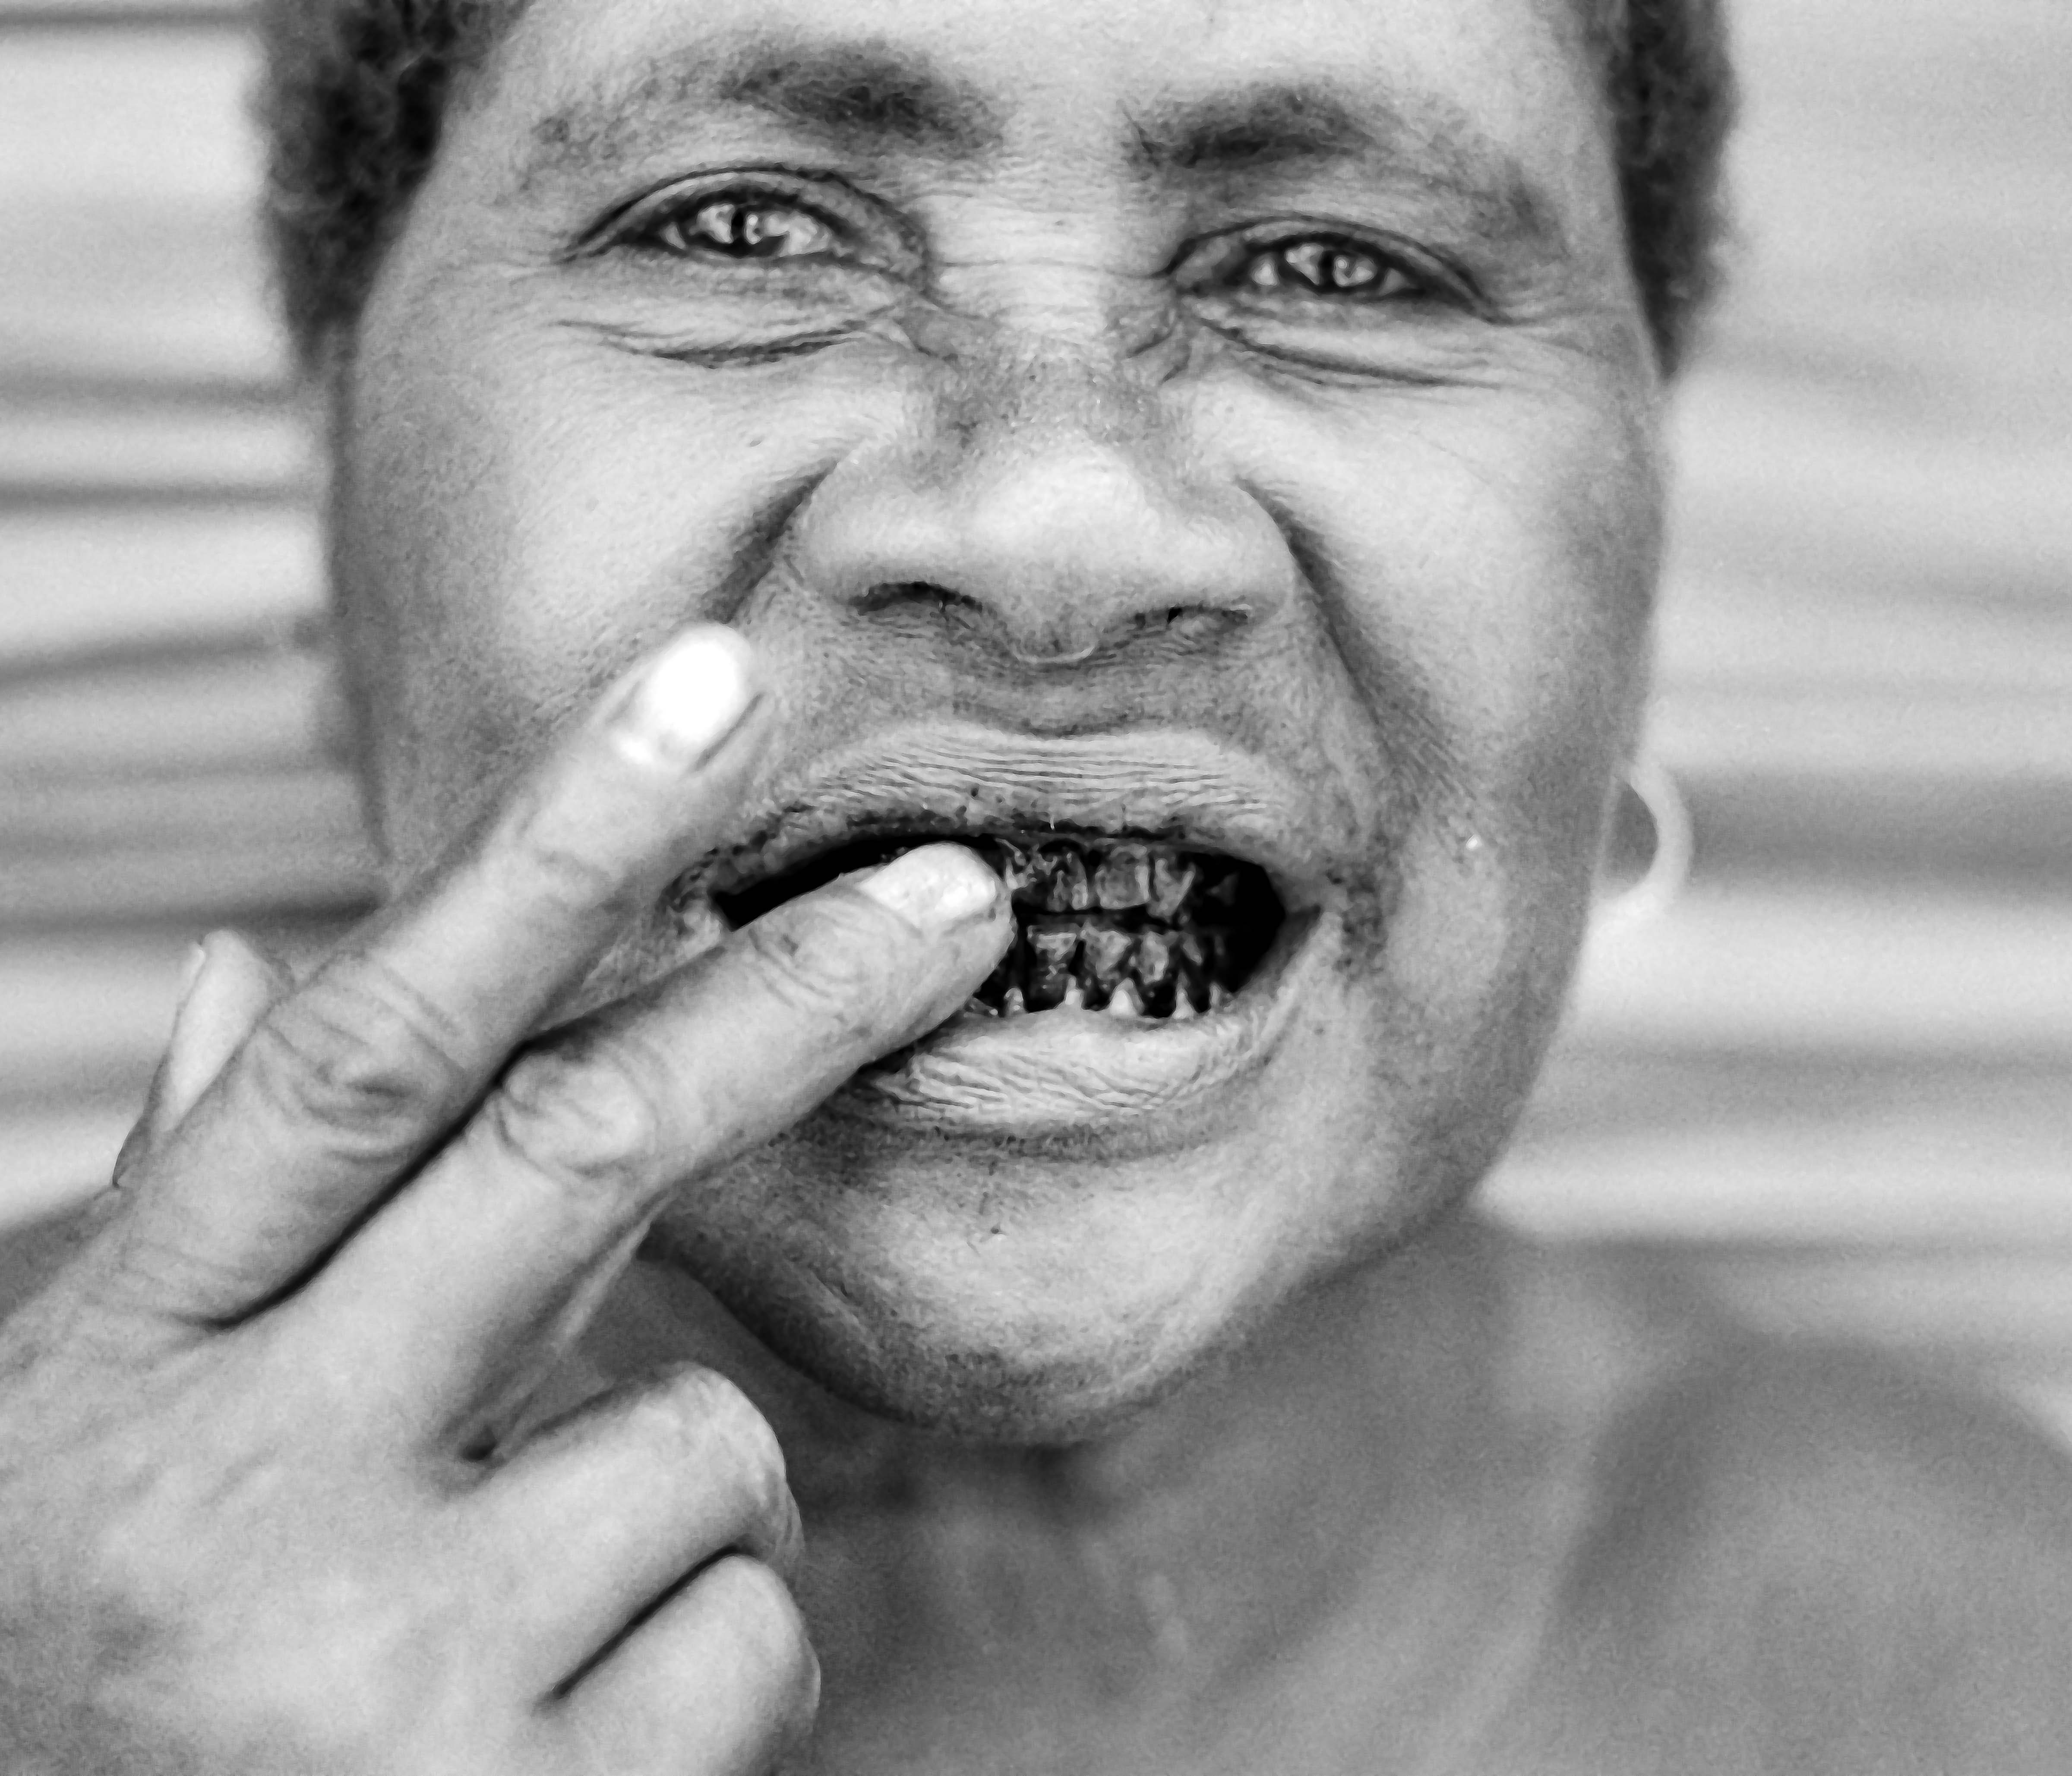 Solomon Islands, Malaita, Black Teeth, 1982